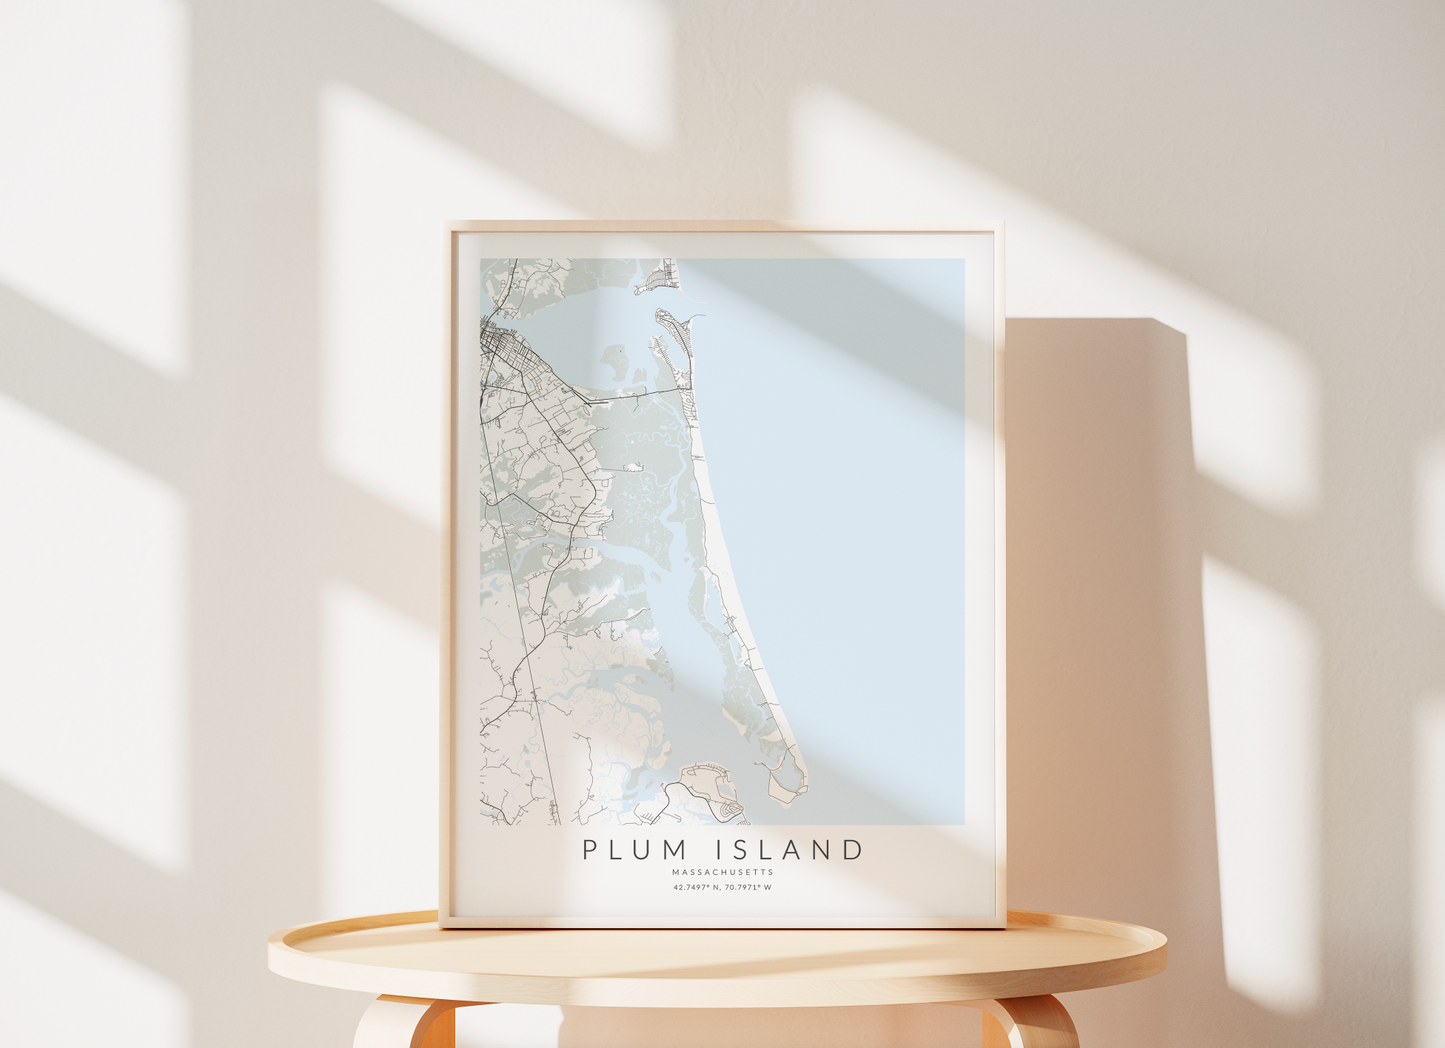 Plum Island Massachusetts Map Print